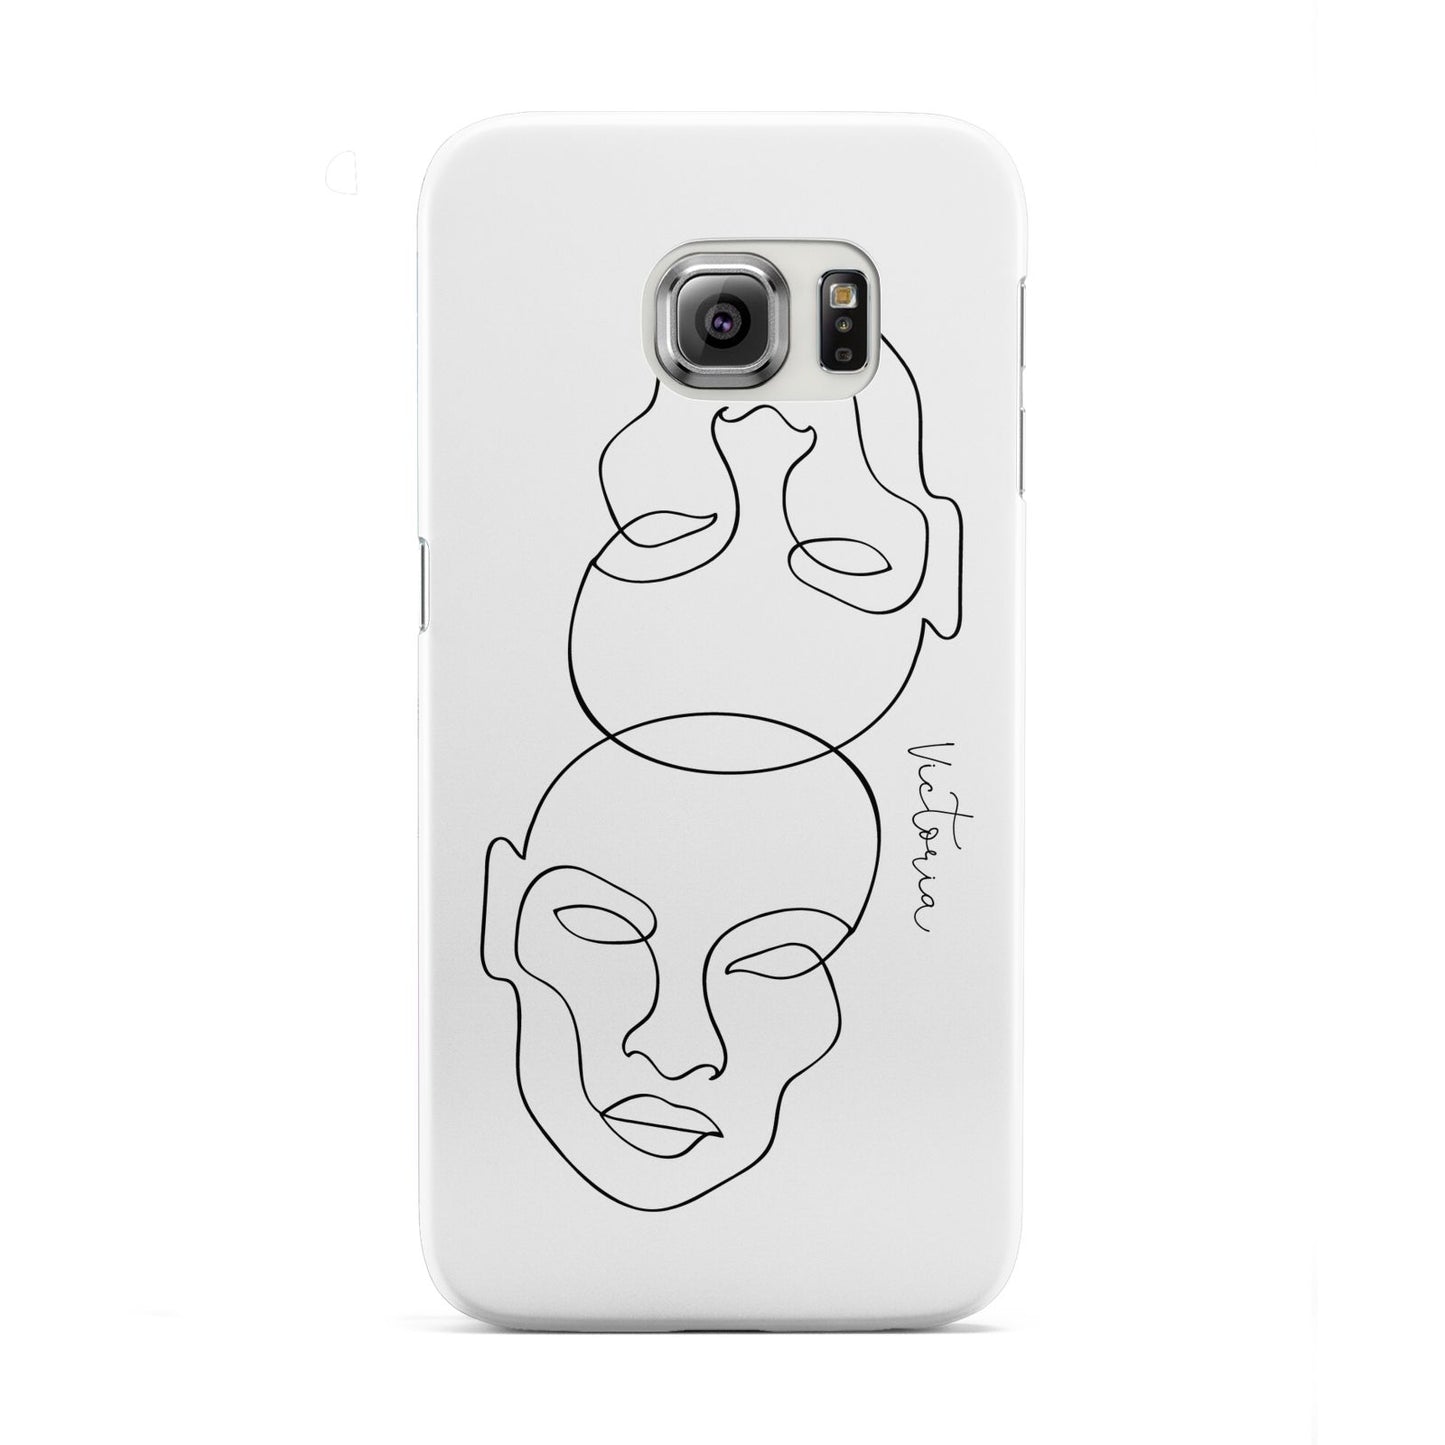 Personalised White Line Art Samsung Galaxy S6 Edge Case